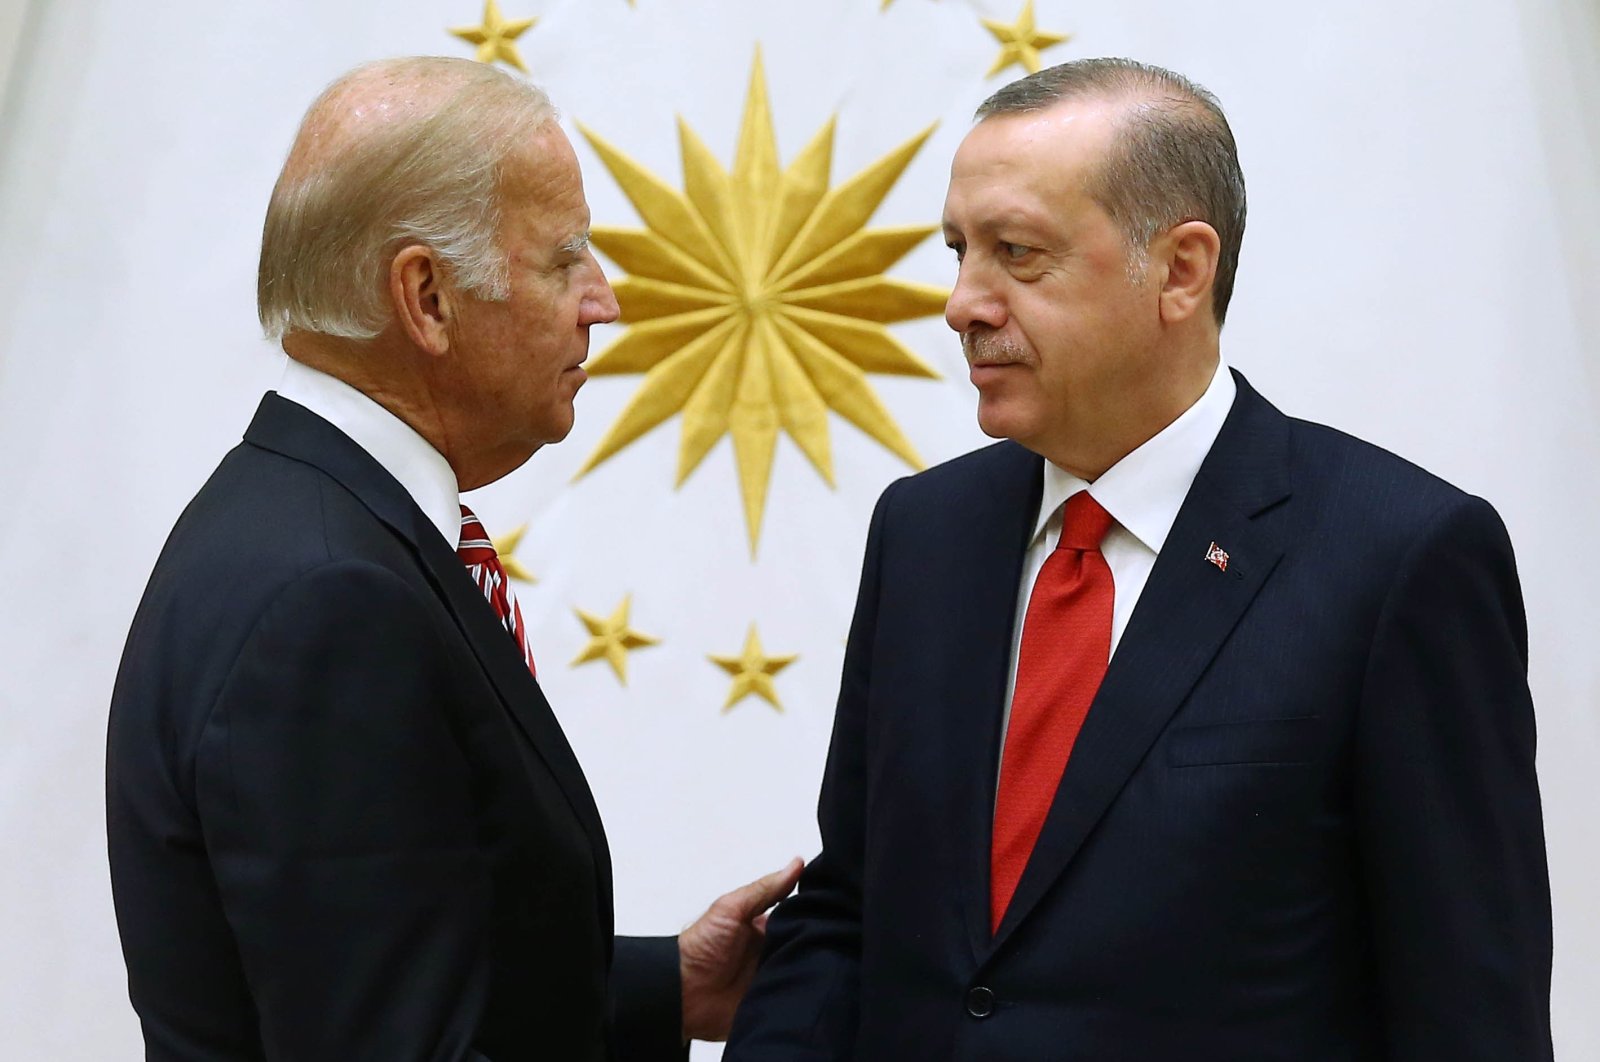 President Recep Tayyip Erdoğan shakes hands with then-U.S. Vice President Joe Biden at the Presidential Complex in the capital Ankara, Turkey, June 26, 2016. (Turkish Presidency Handout)